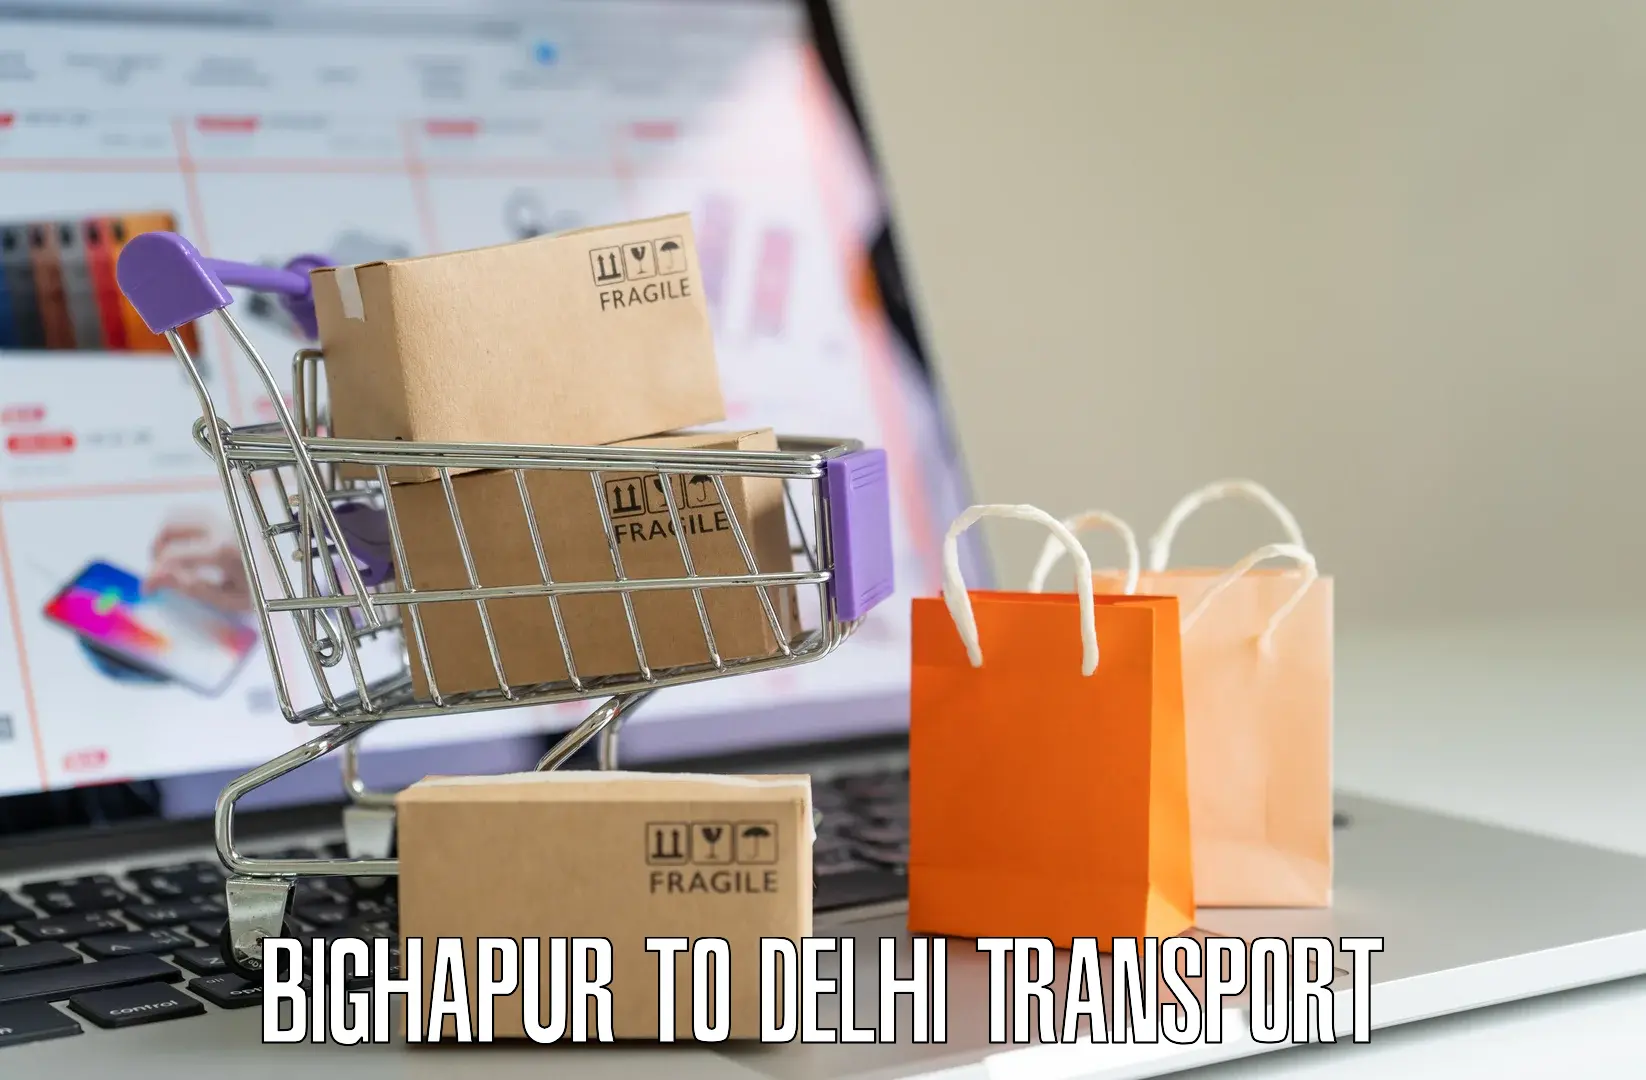 Online transport service Bighapur to Burari